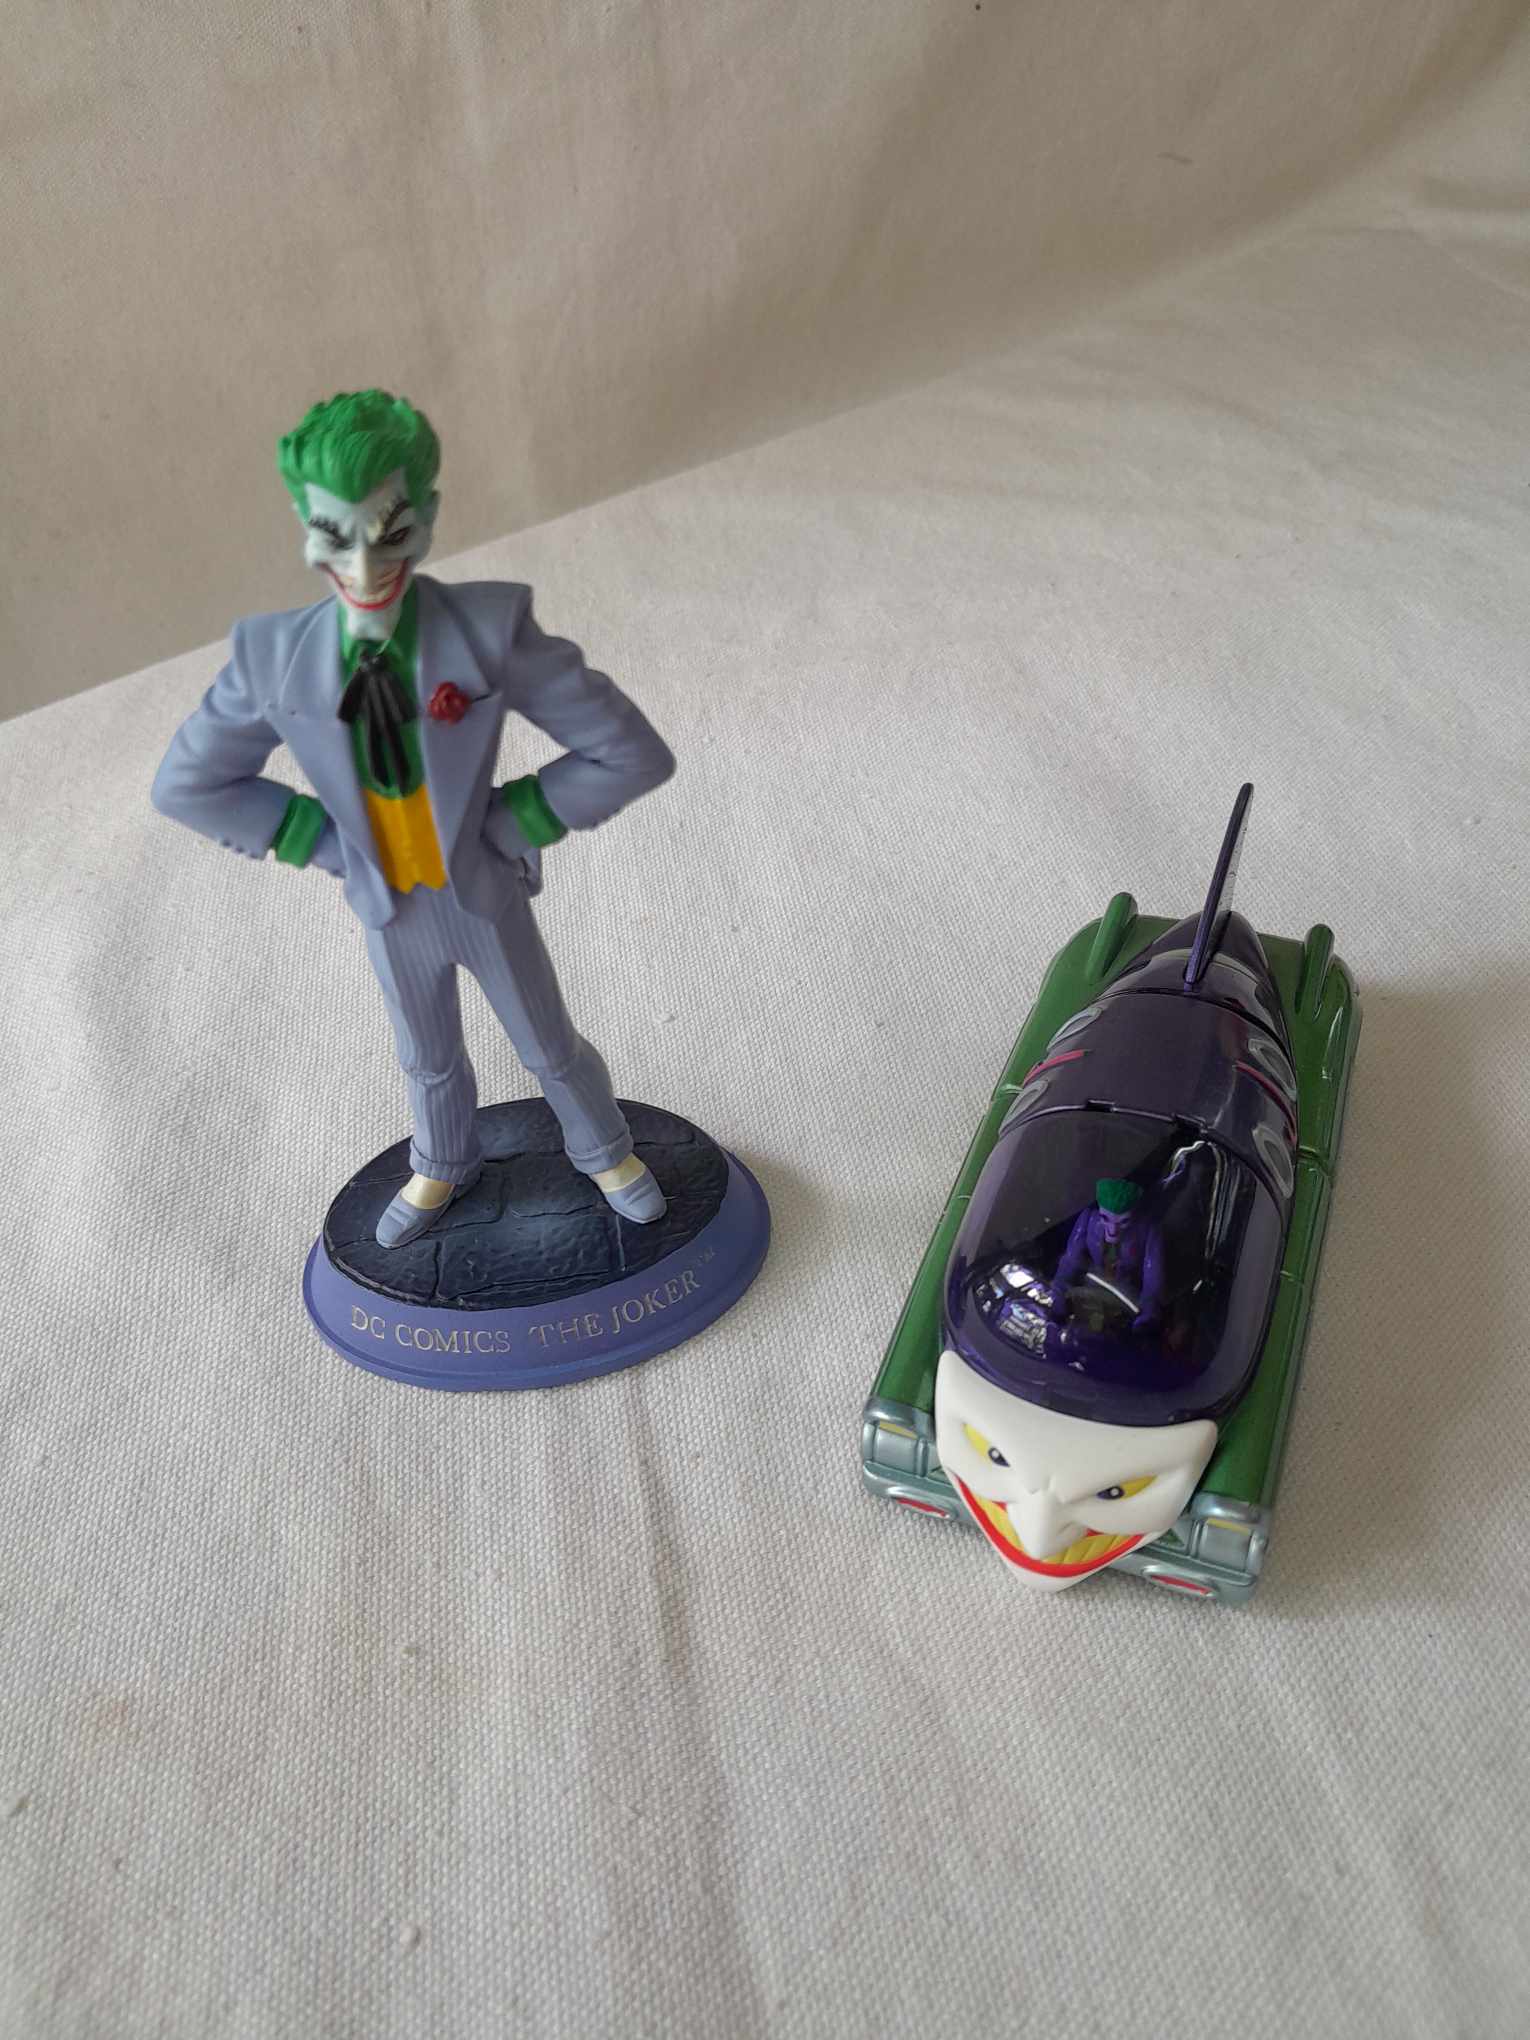 CORGI The Batman Chassis Art Collection " The Joker + Car"